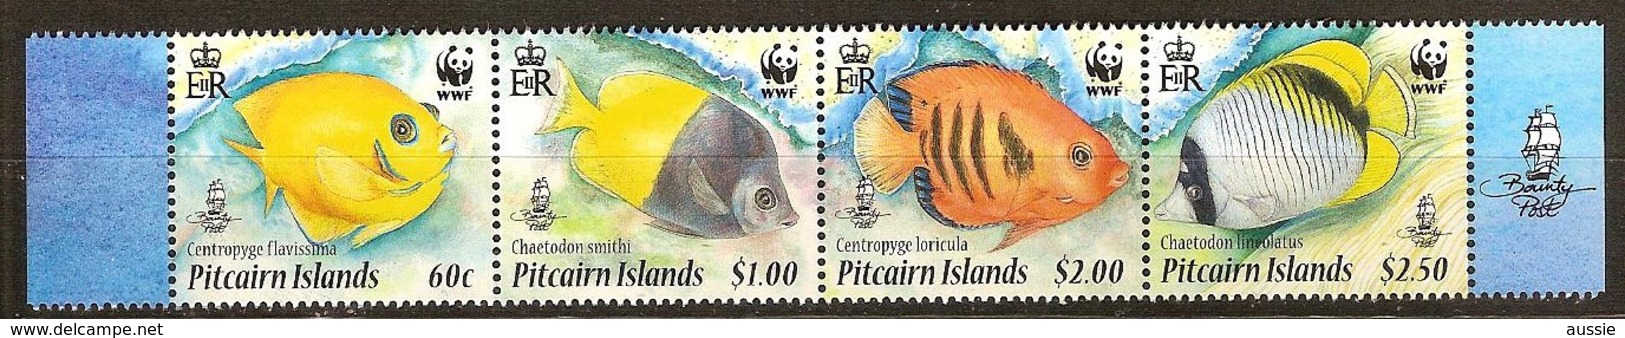 Pitcairn Islands 2010 Yvertn° 735-738 *** MNH Cote 13,00 Euro Faune WWF Poissons Fish Vissen - Pitcairn